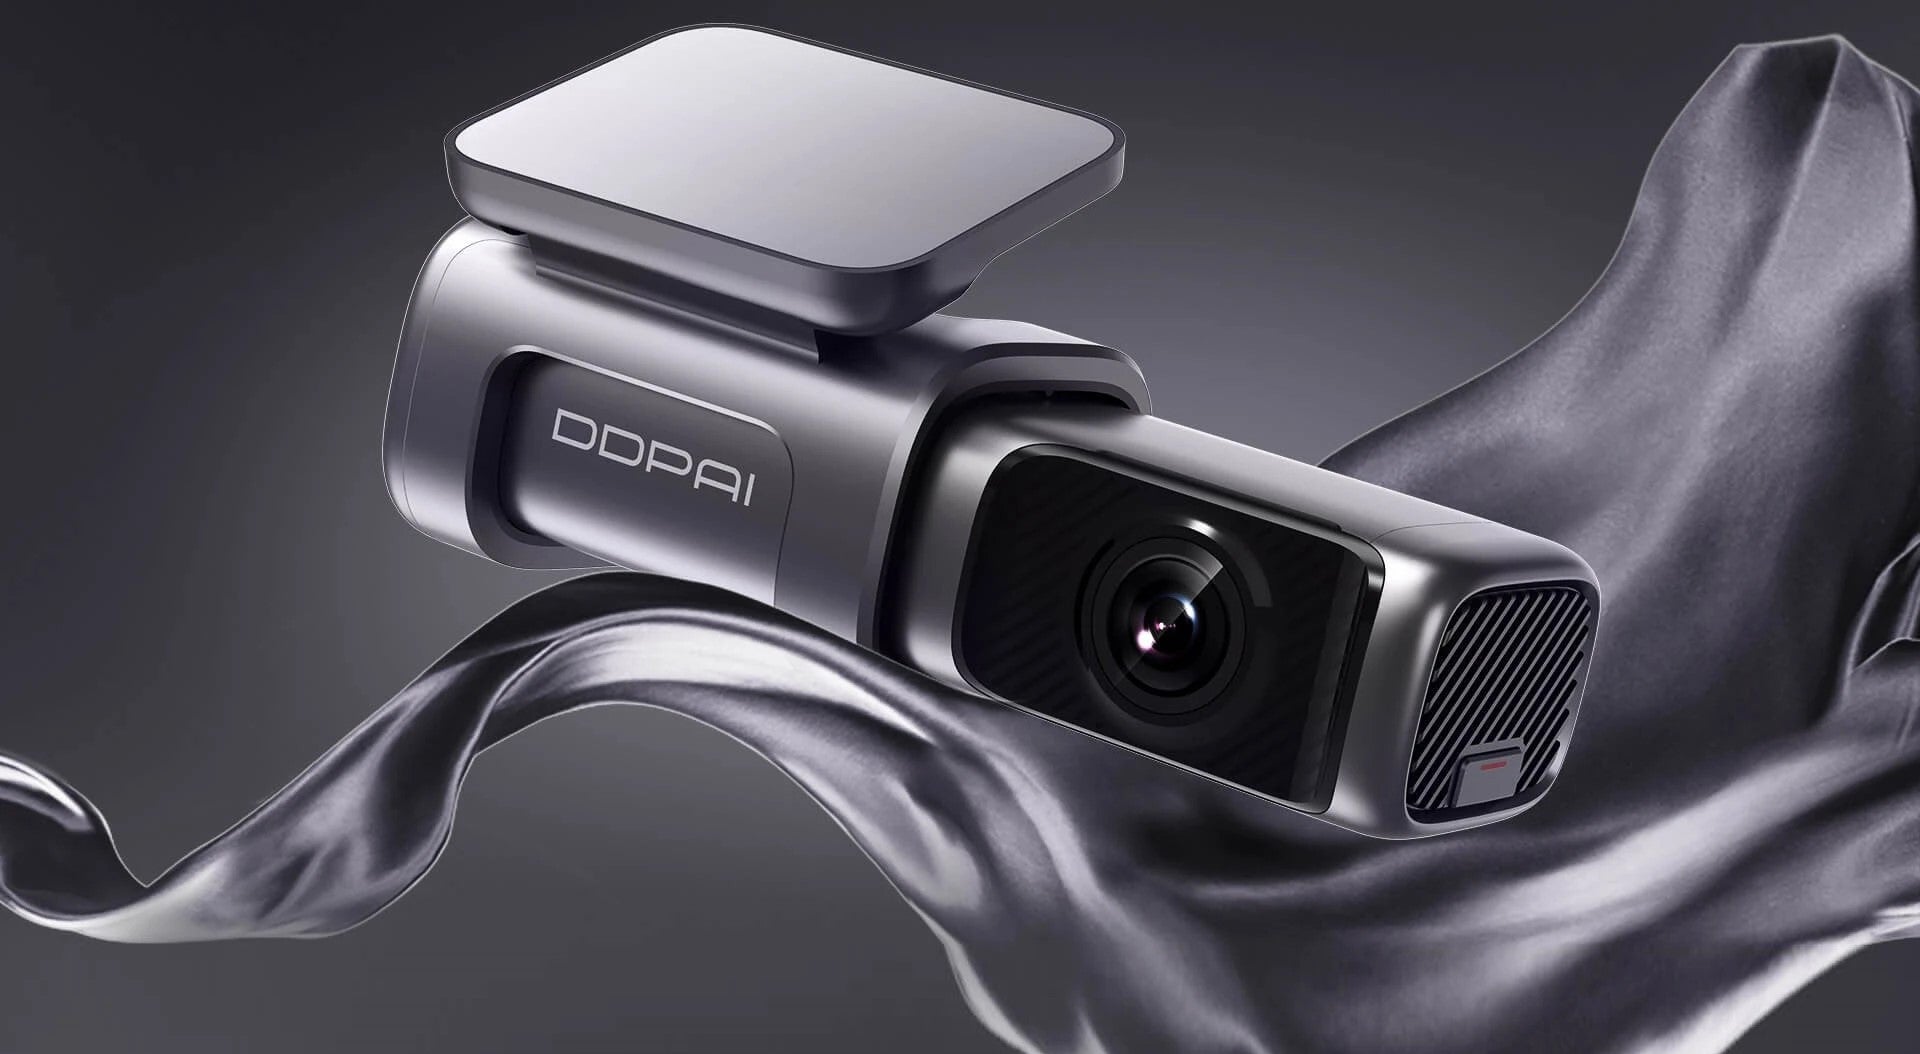 The DDPai Mini5 Dash Cam Review: 4K Video, Convenient Onboard Storage,  Terrible Audio